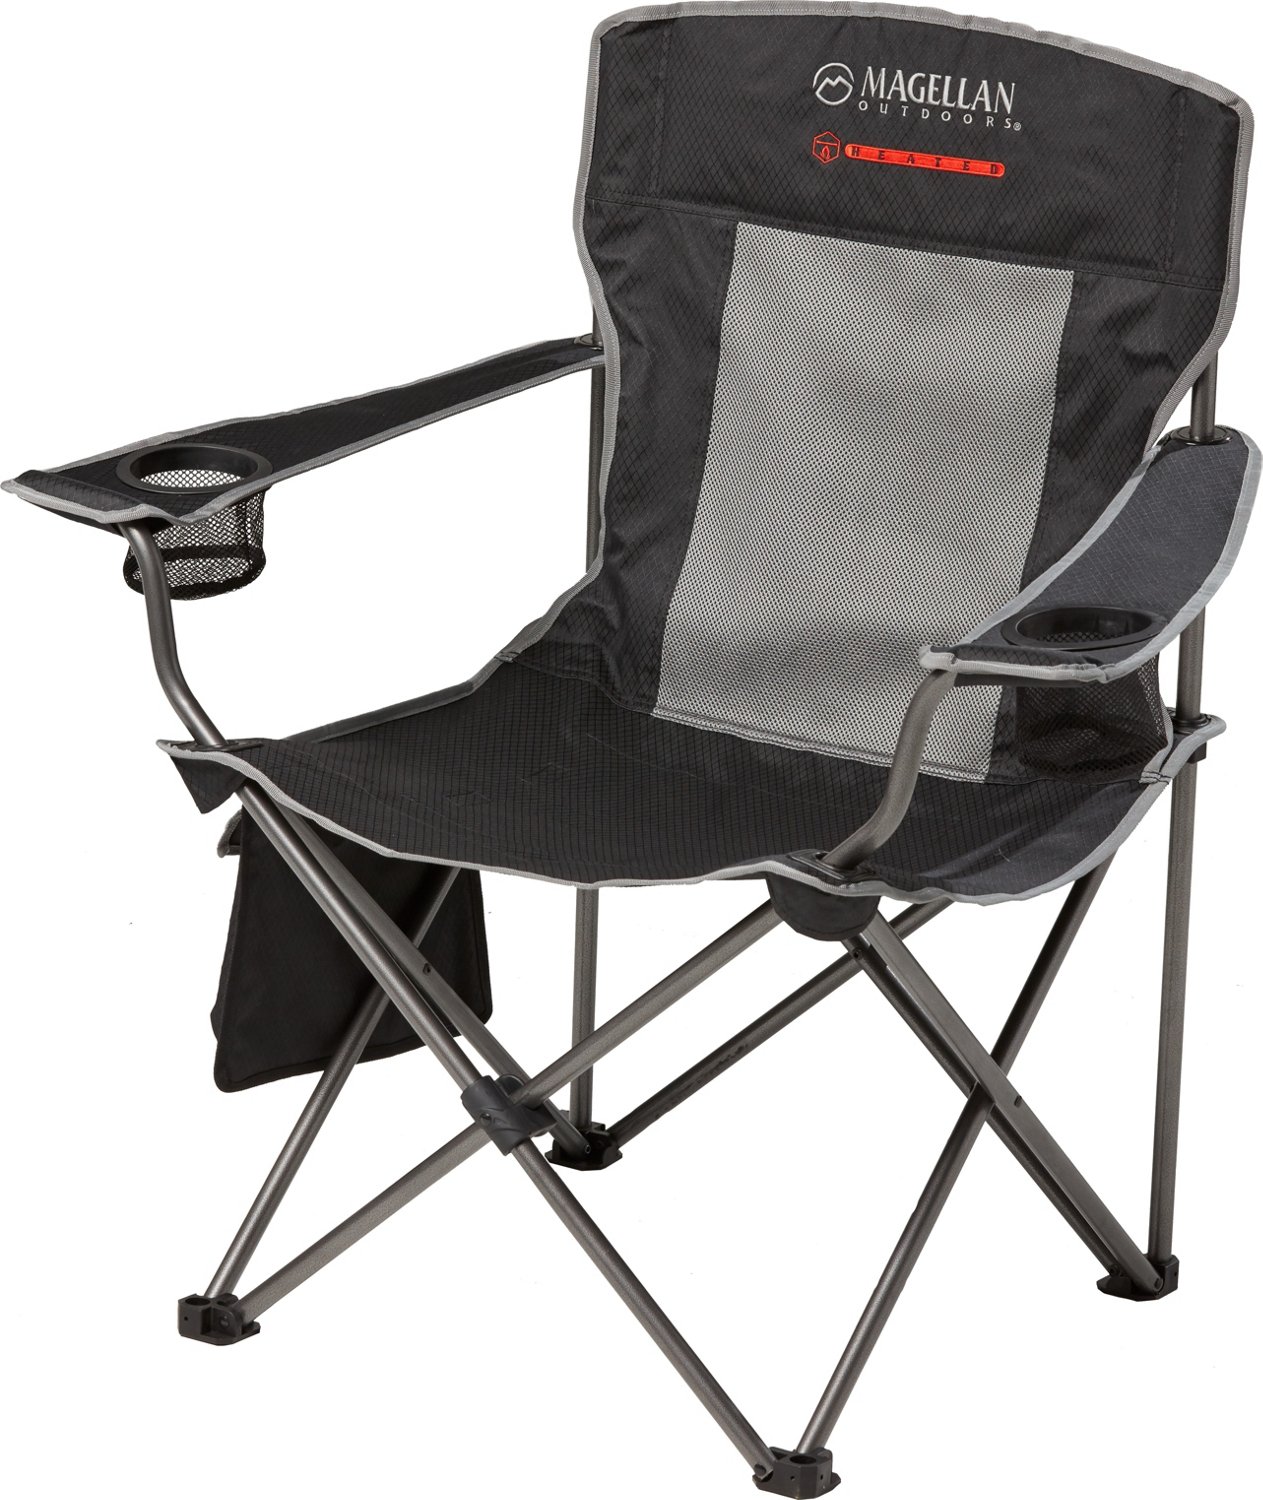 Magellan Outdoors Heated Quad Folding Chair | Academy